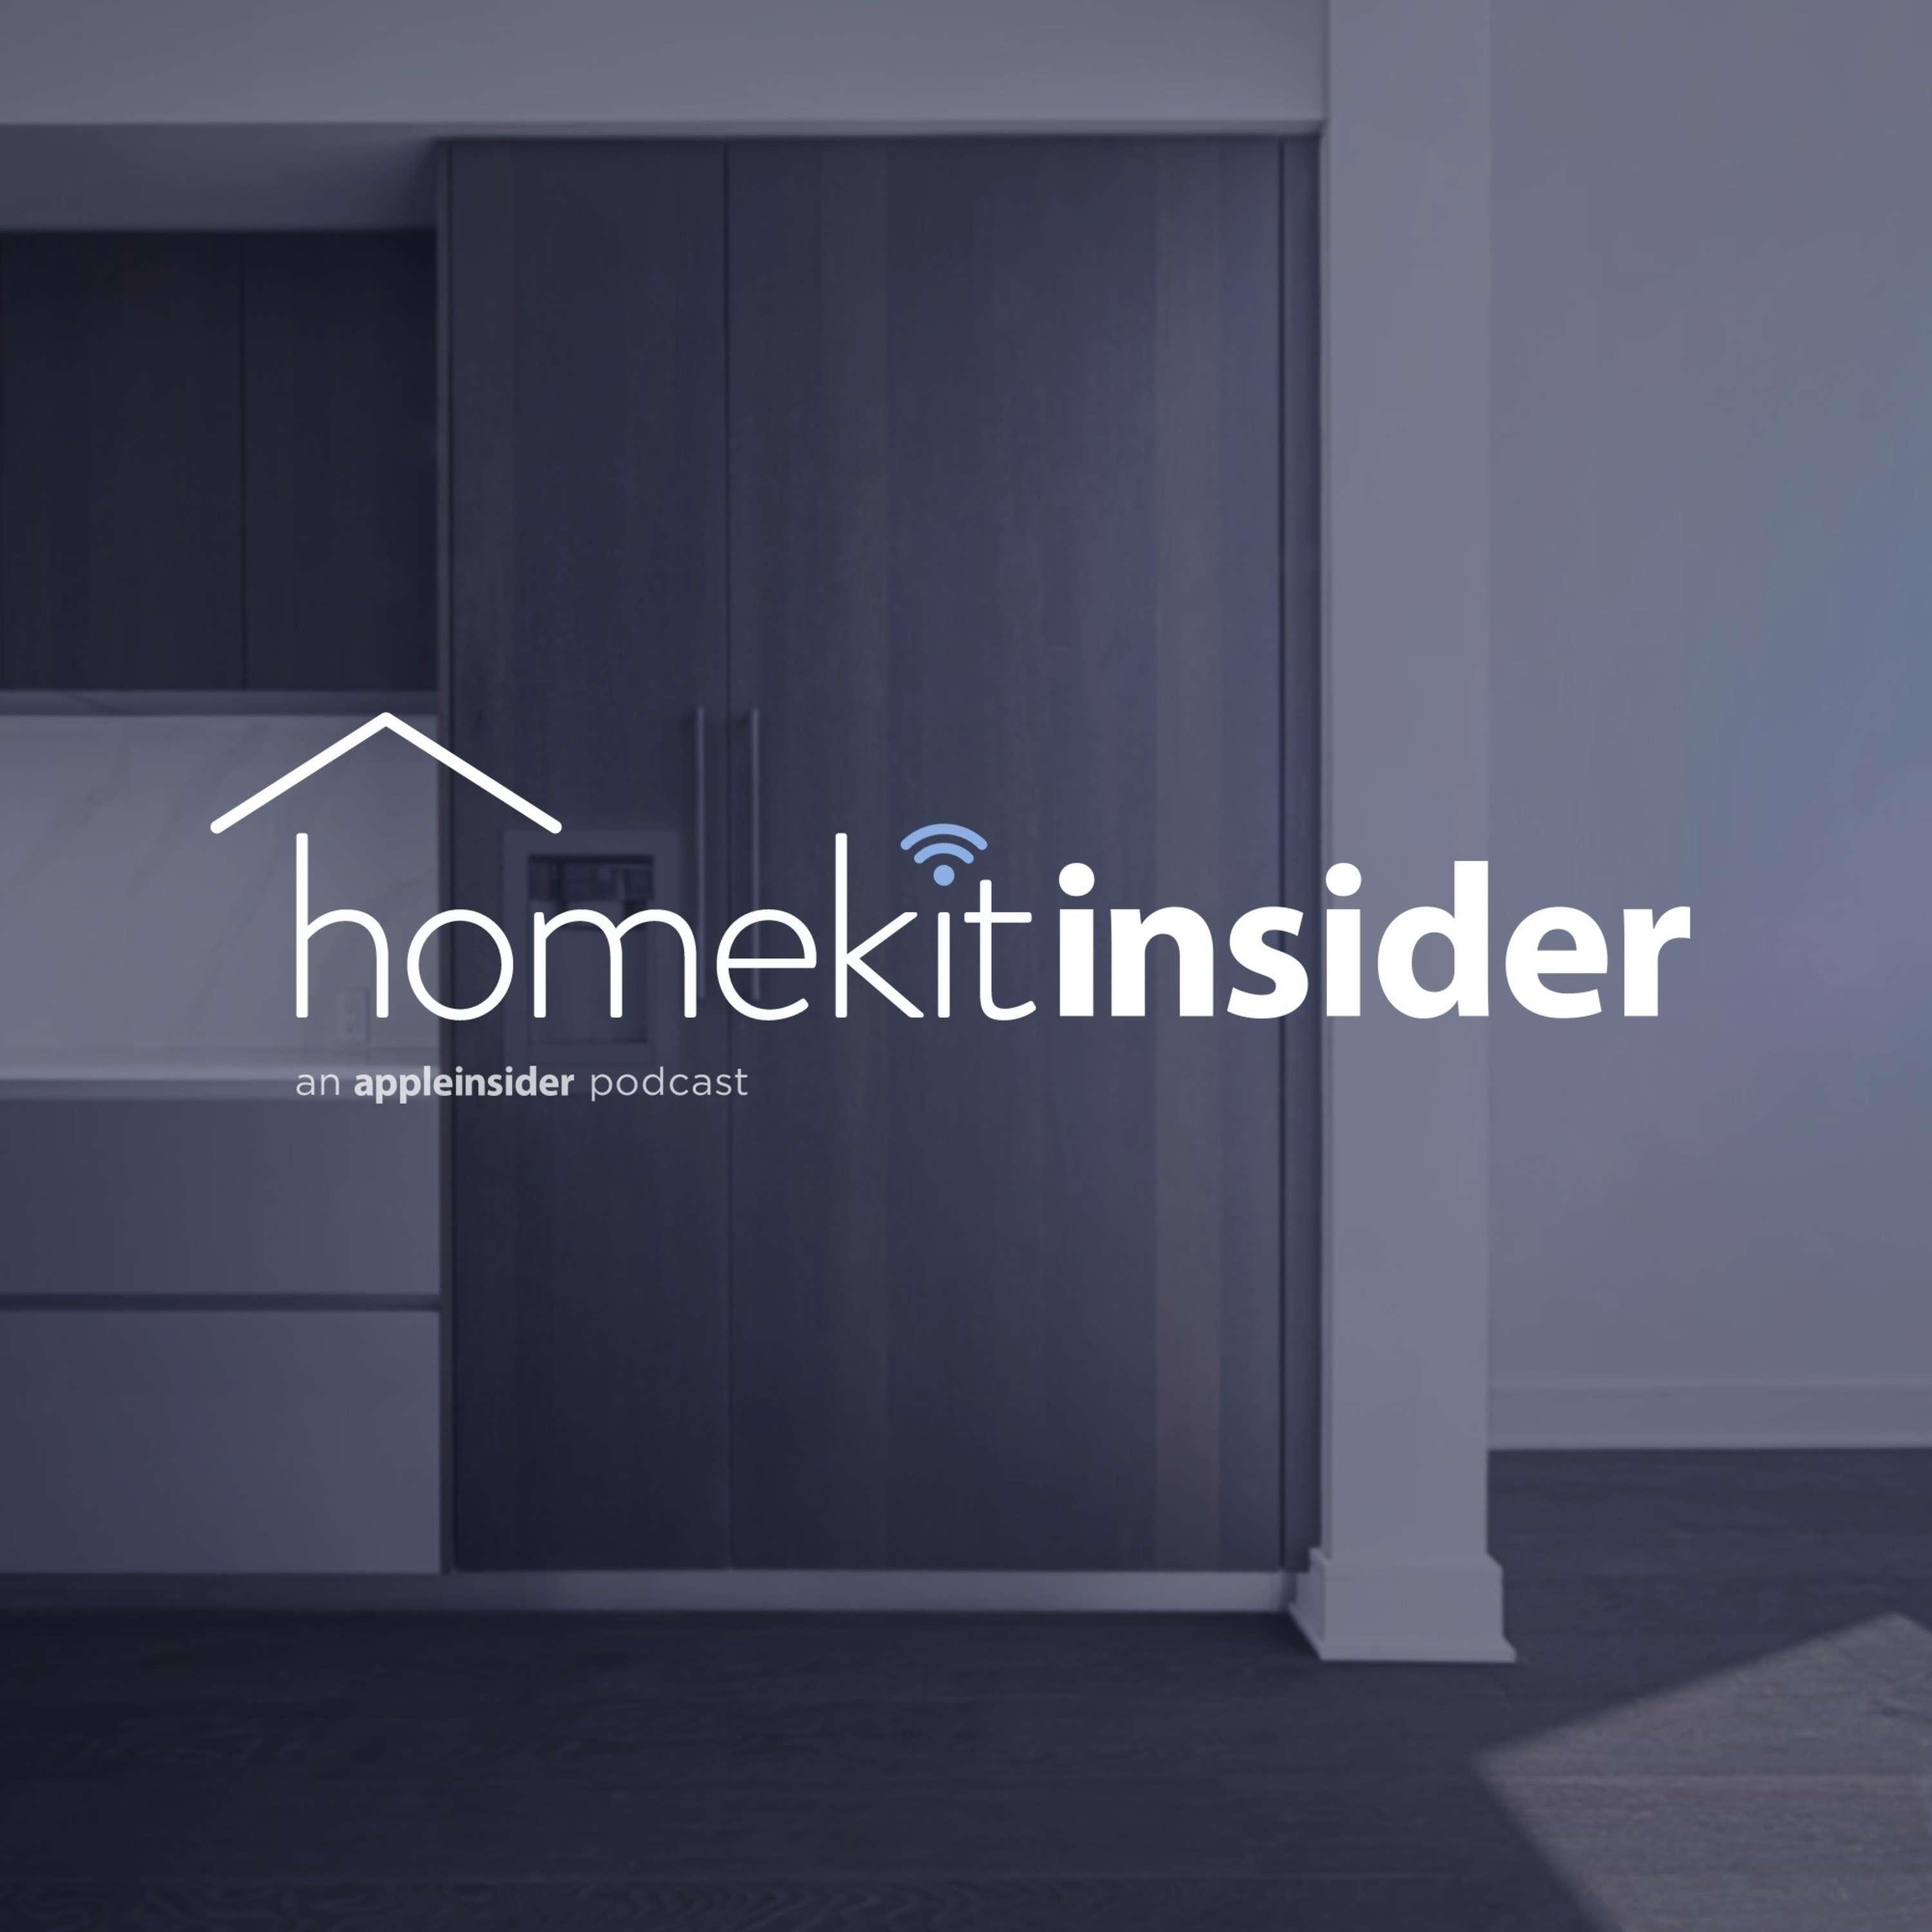 Meross Announces Socket Thermostat with HomeKit - Homekit News and Reviews